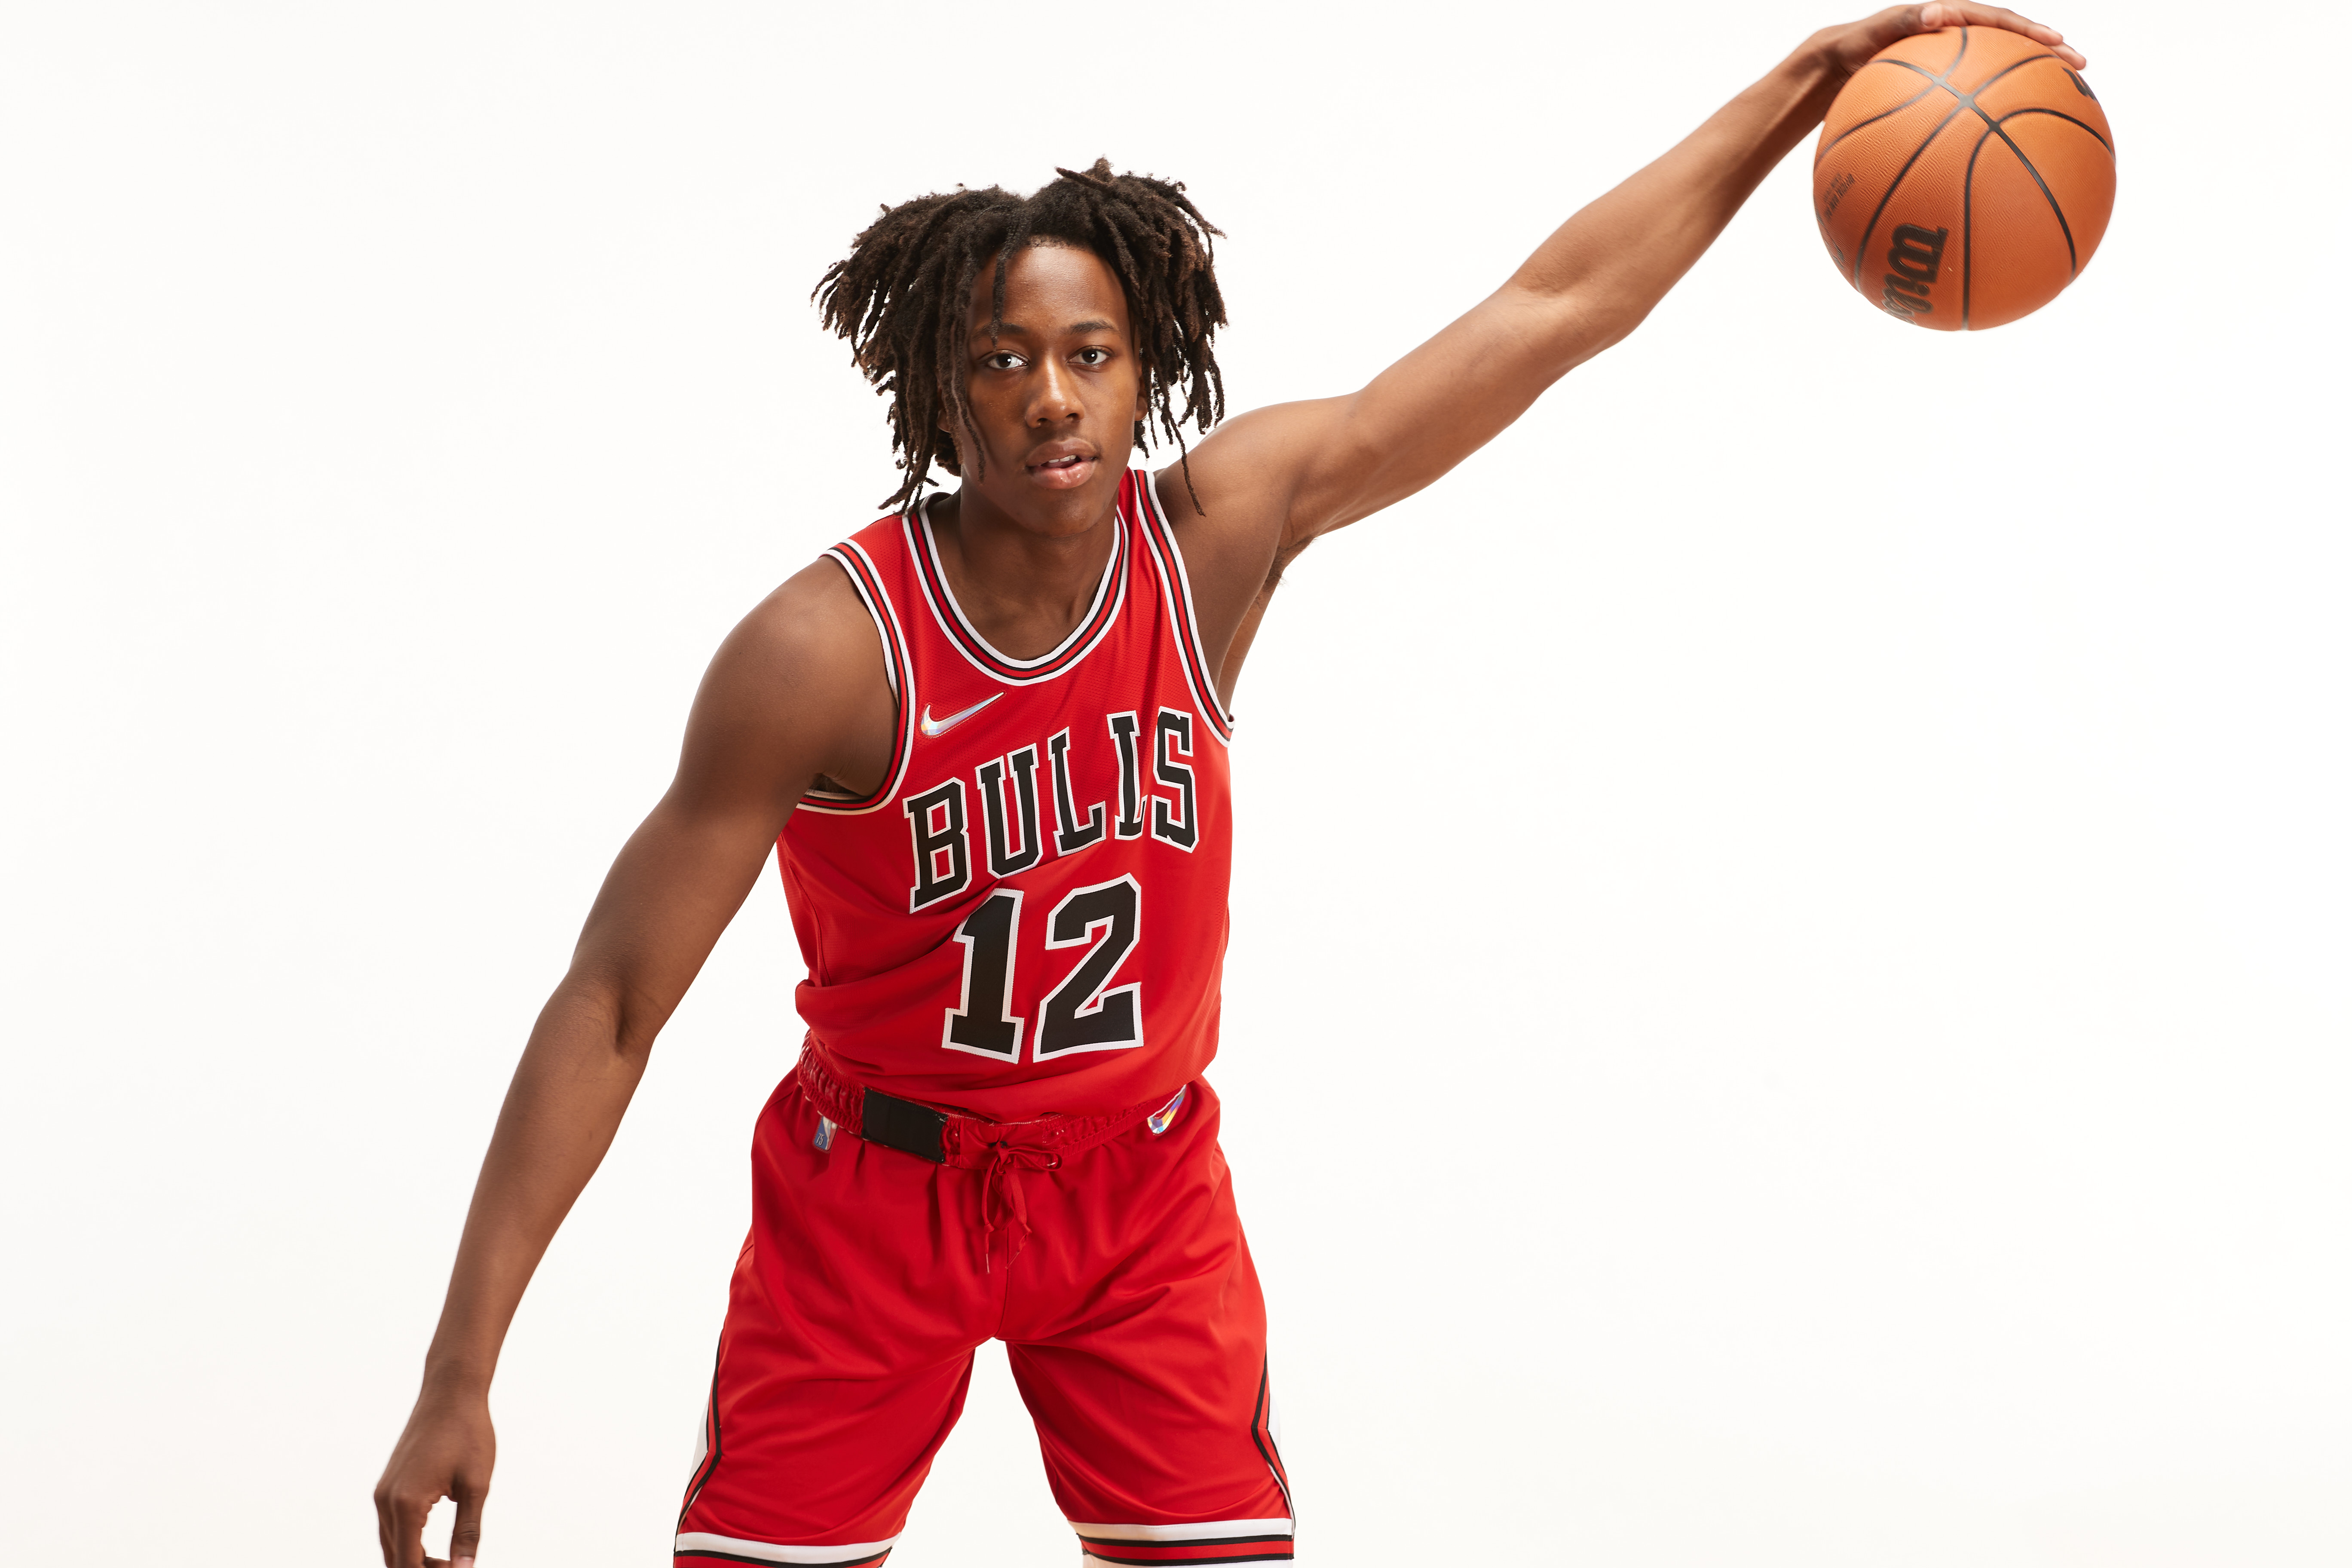 Bulls rookie Ayo Dosunmu poses during a photo shoot